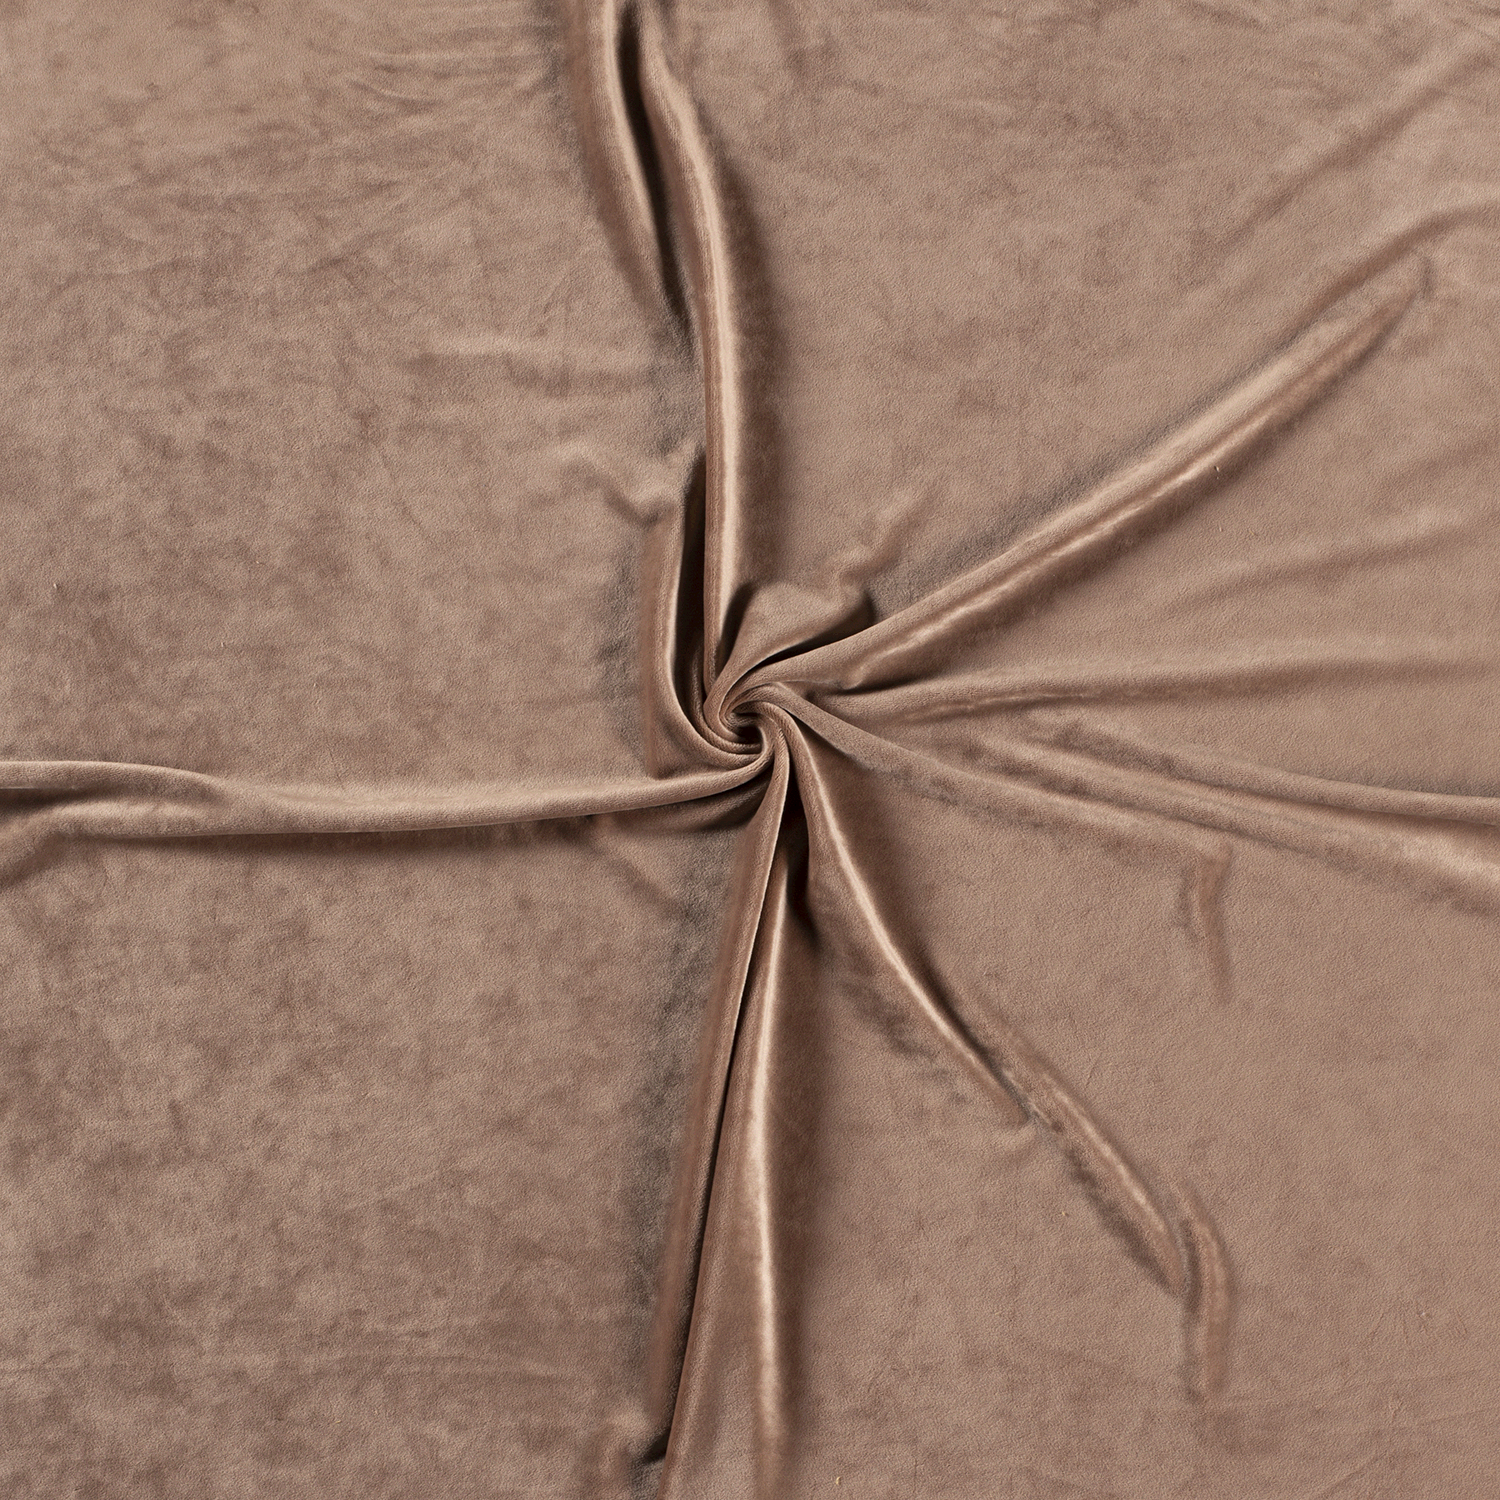 Buy 018-beige Crushed velvet - 29 colors *From 50cm